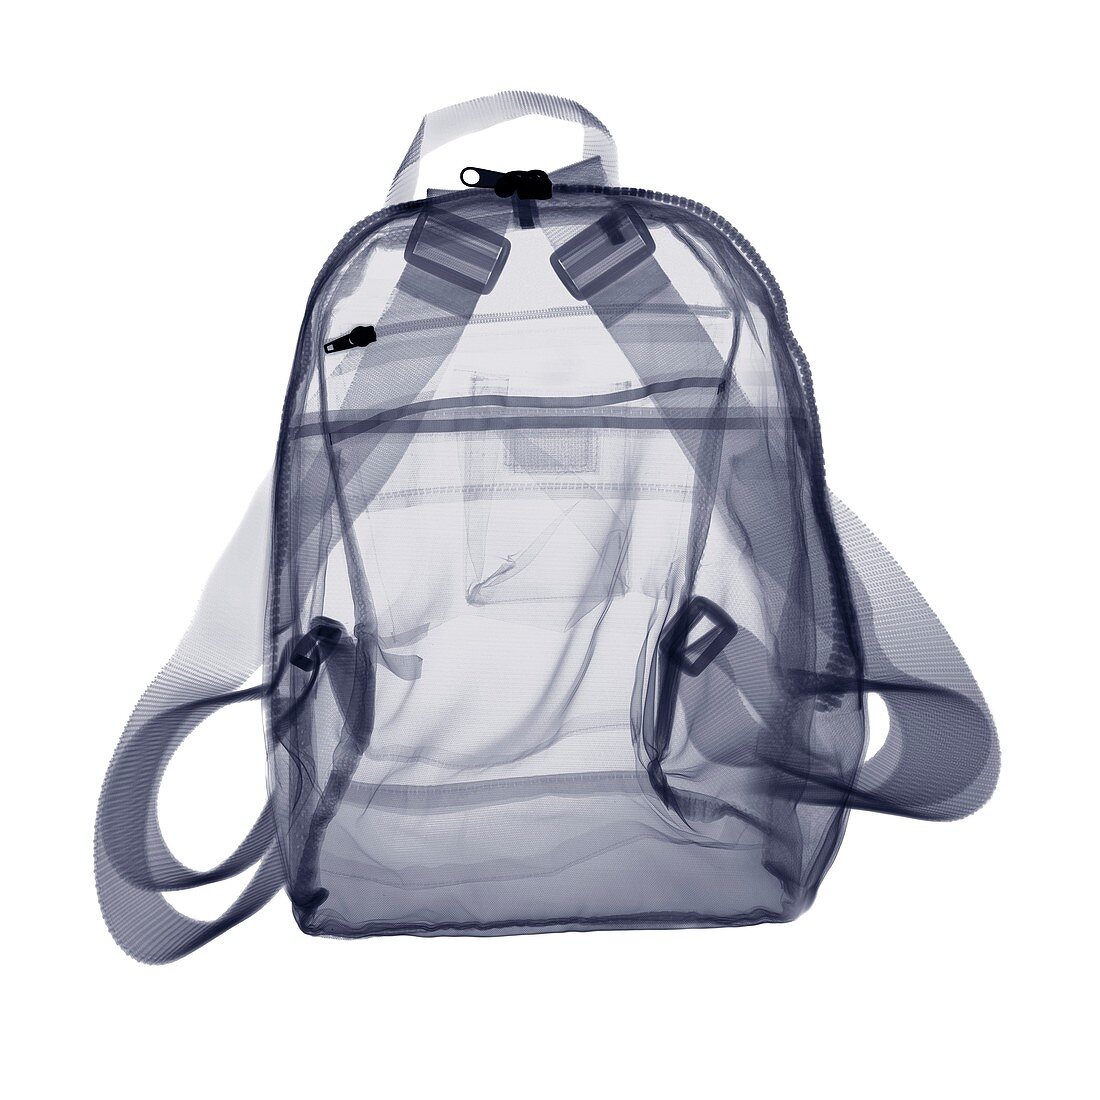 Backpack bag, X-ray